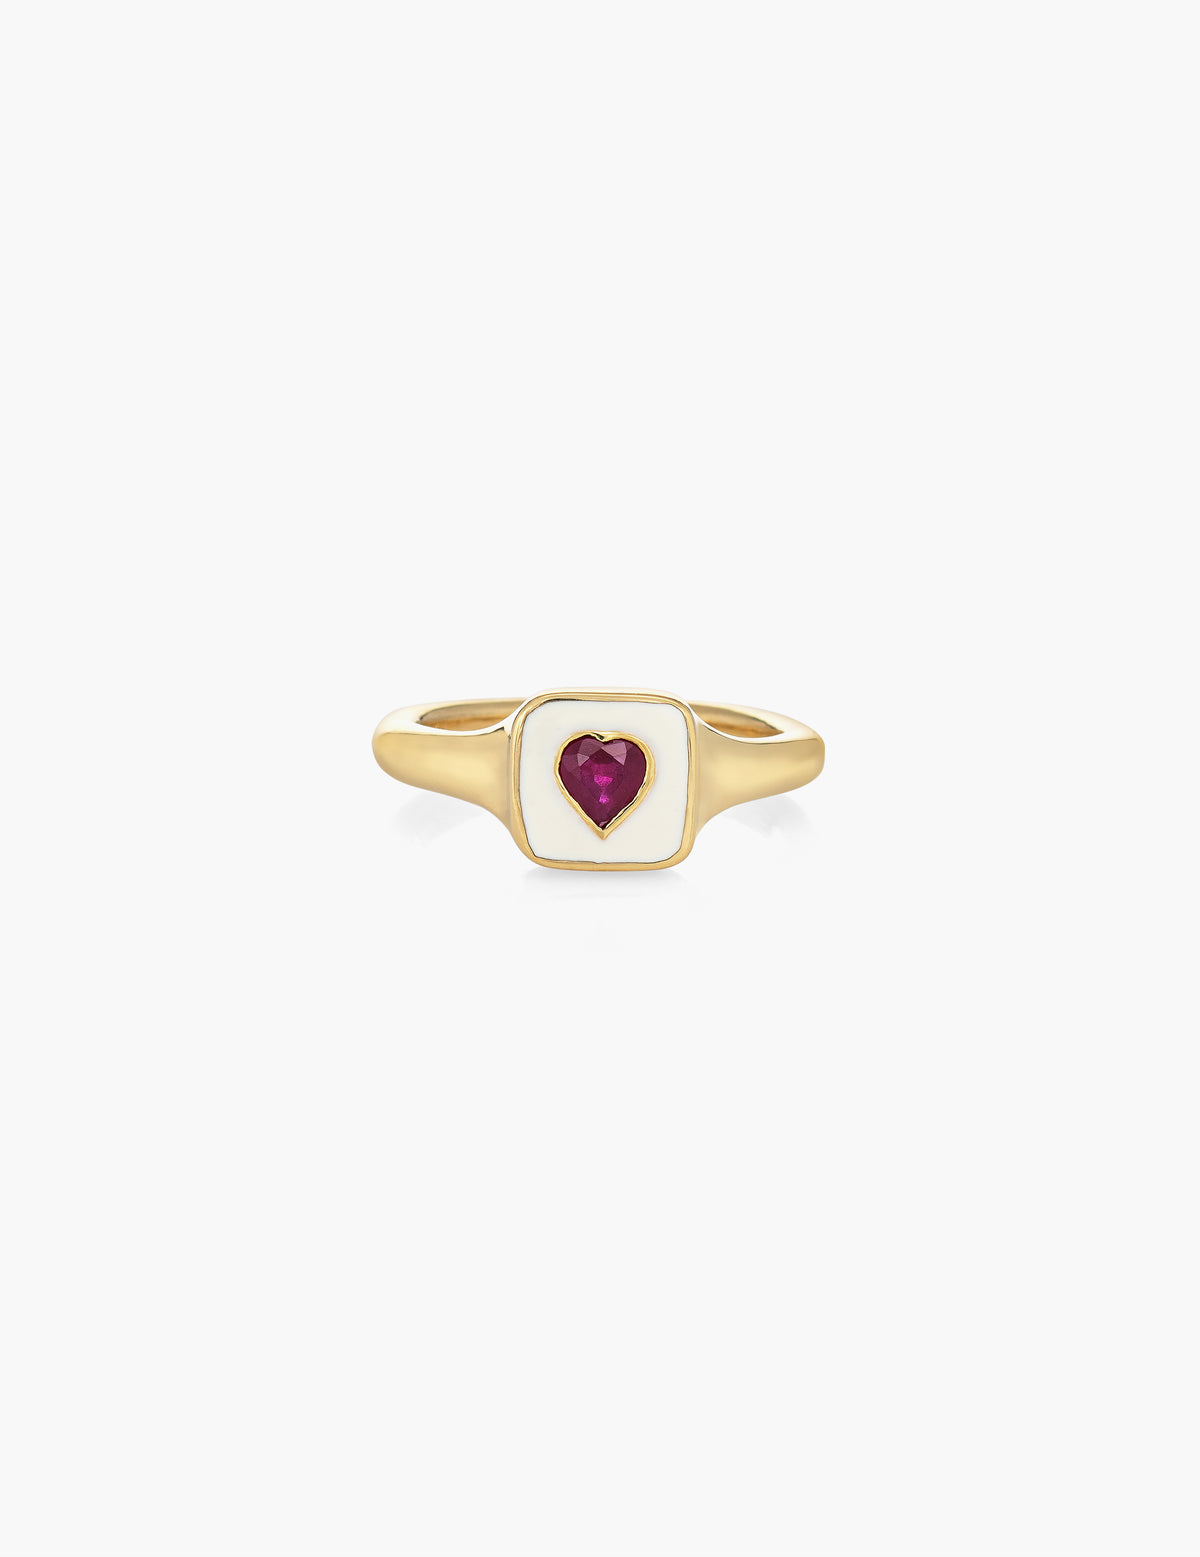 Ruby Heart Signet Ring